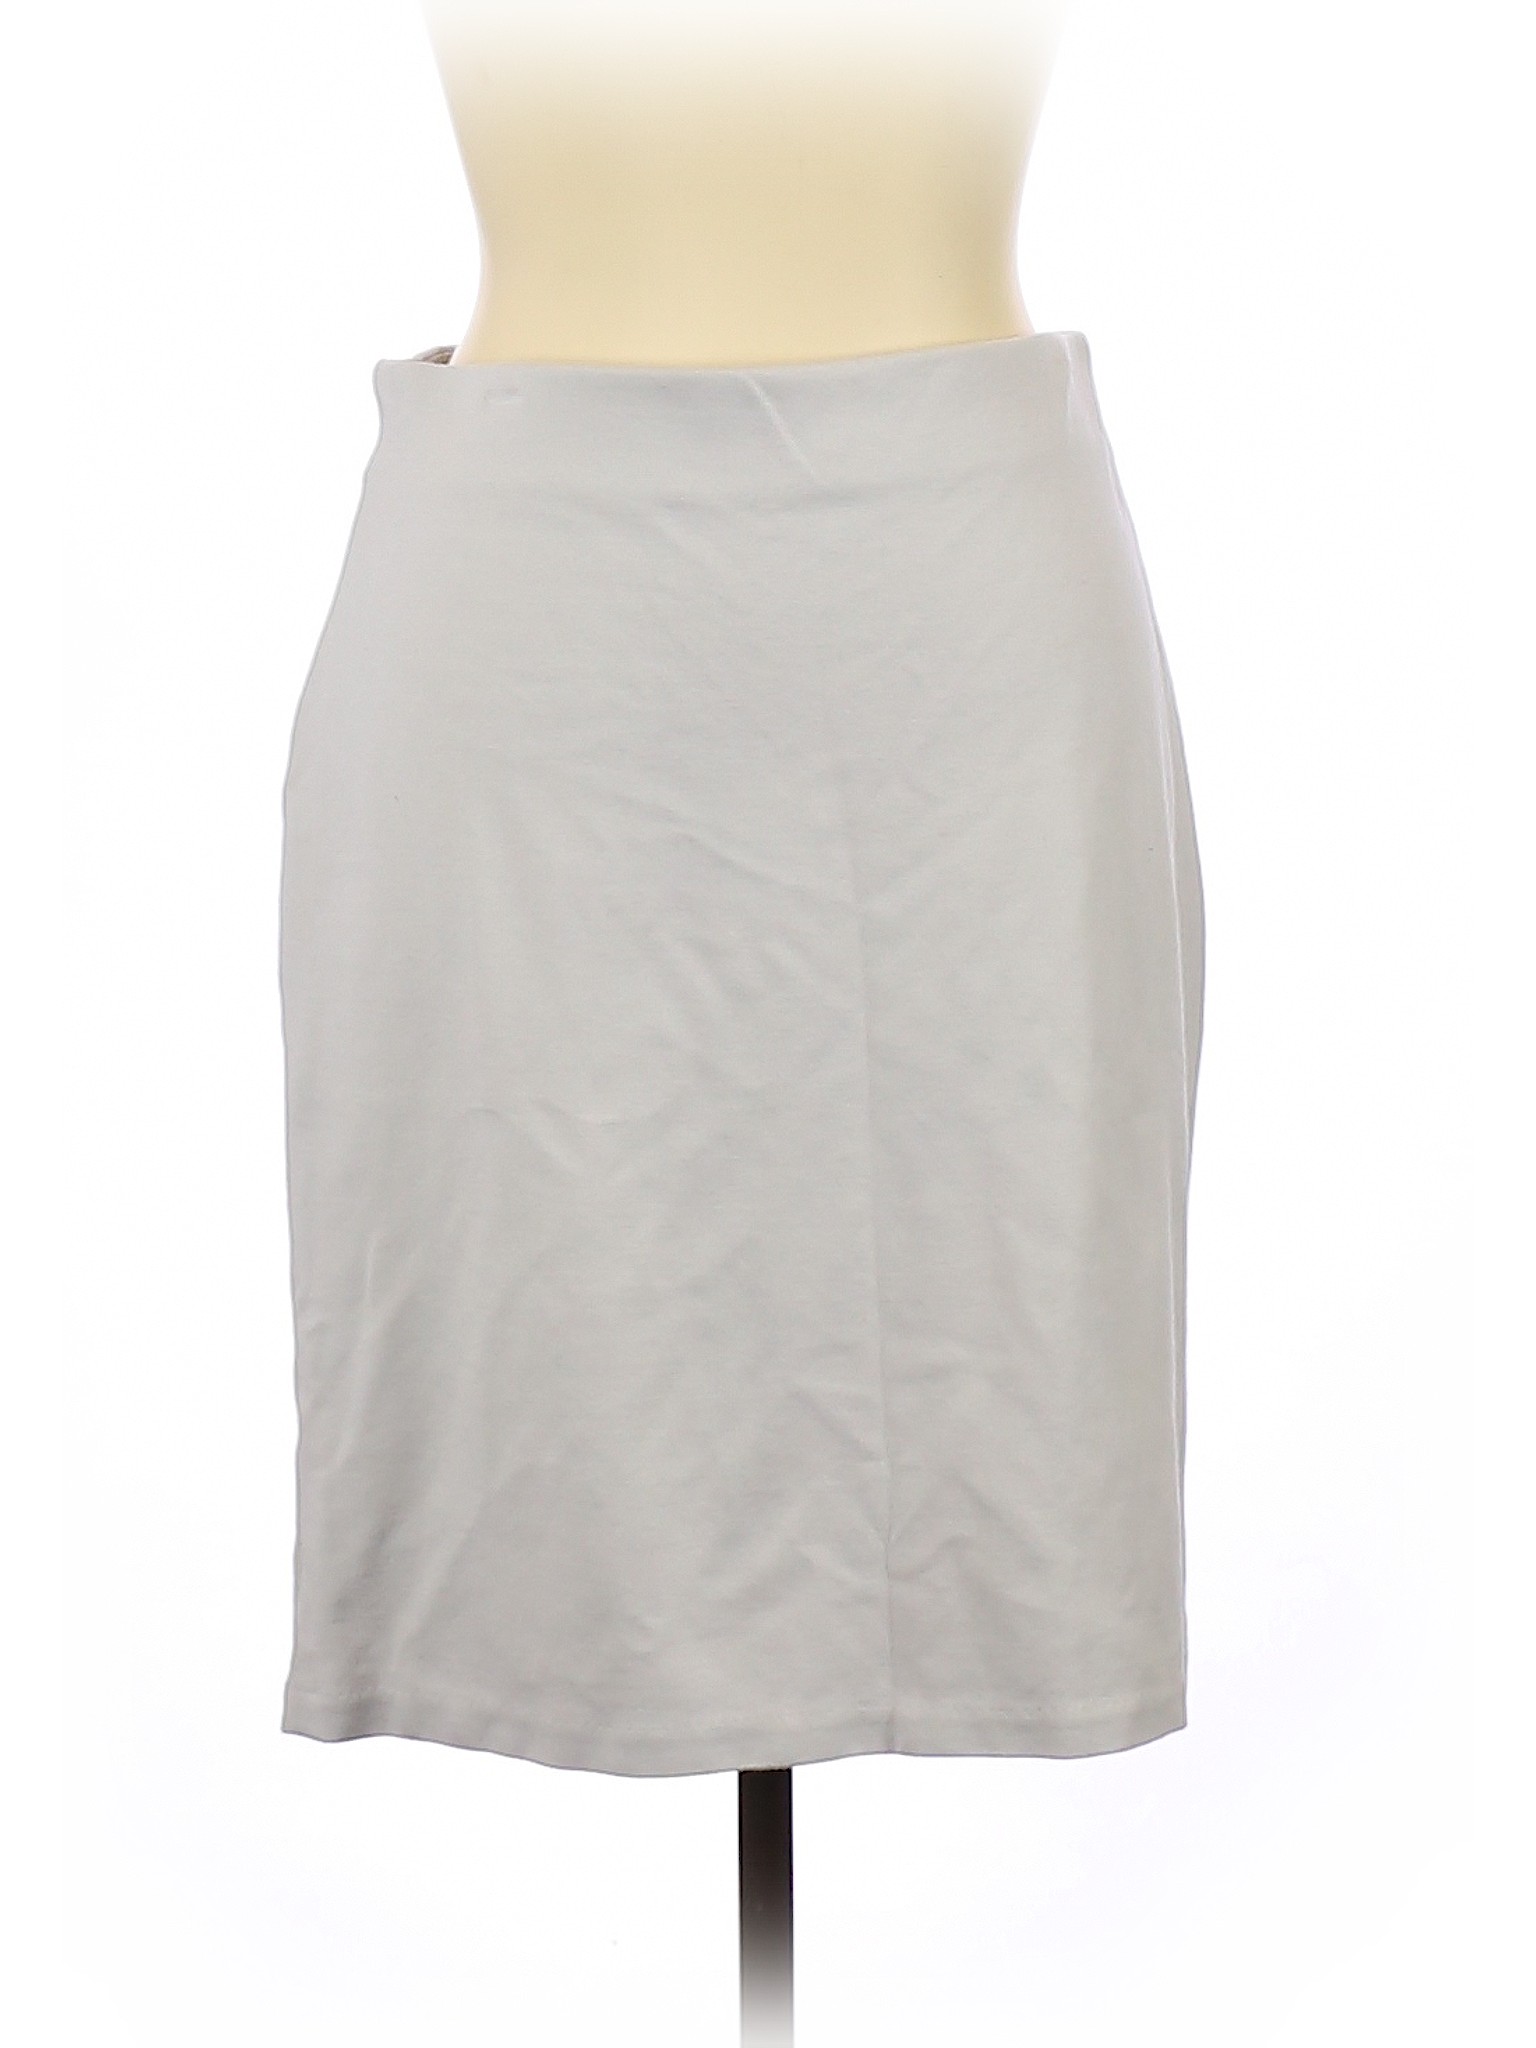 Philosophy Republic Clothing Women Gray Casual Skirt 10 | eBay